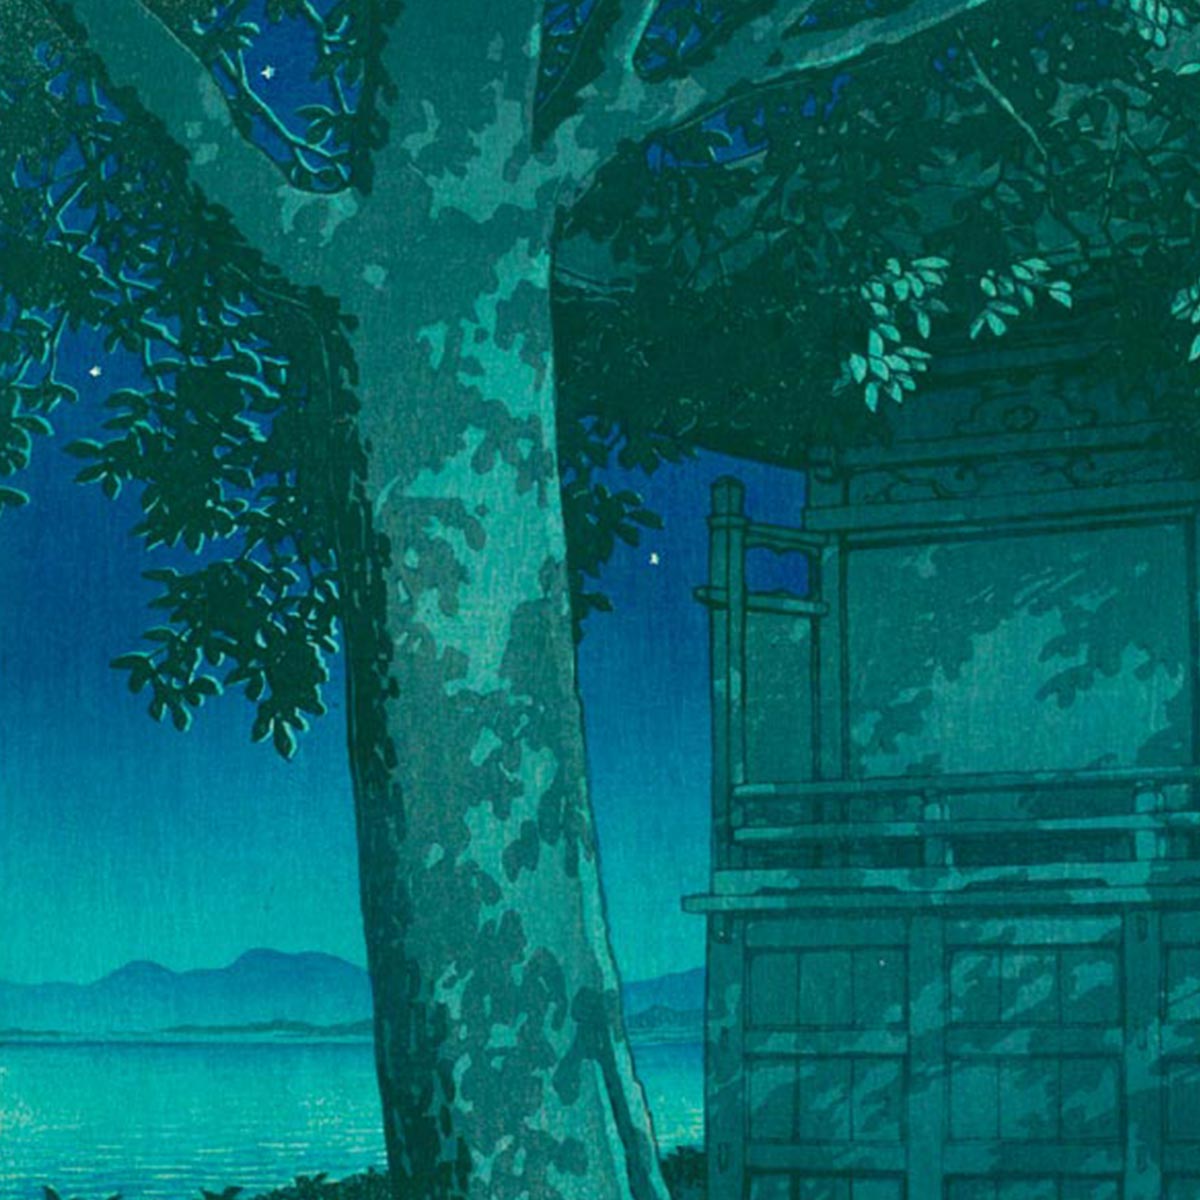 Hachirōgata Lagoon Akita Art Print By Hasui